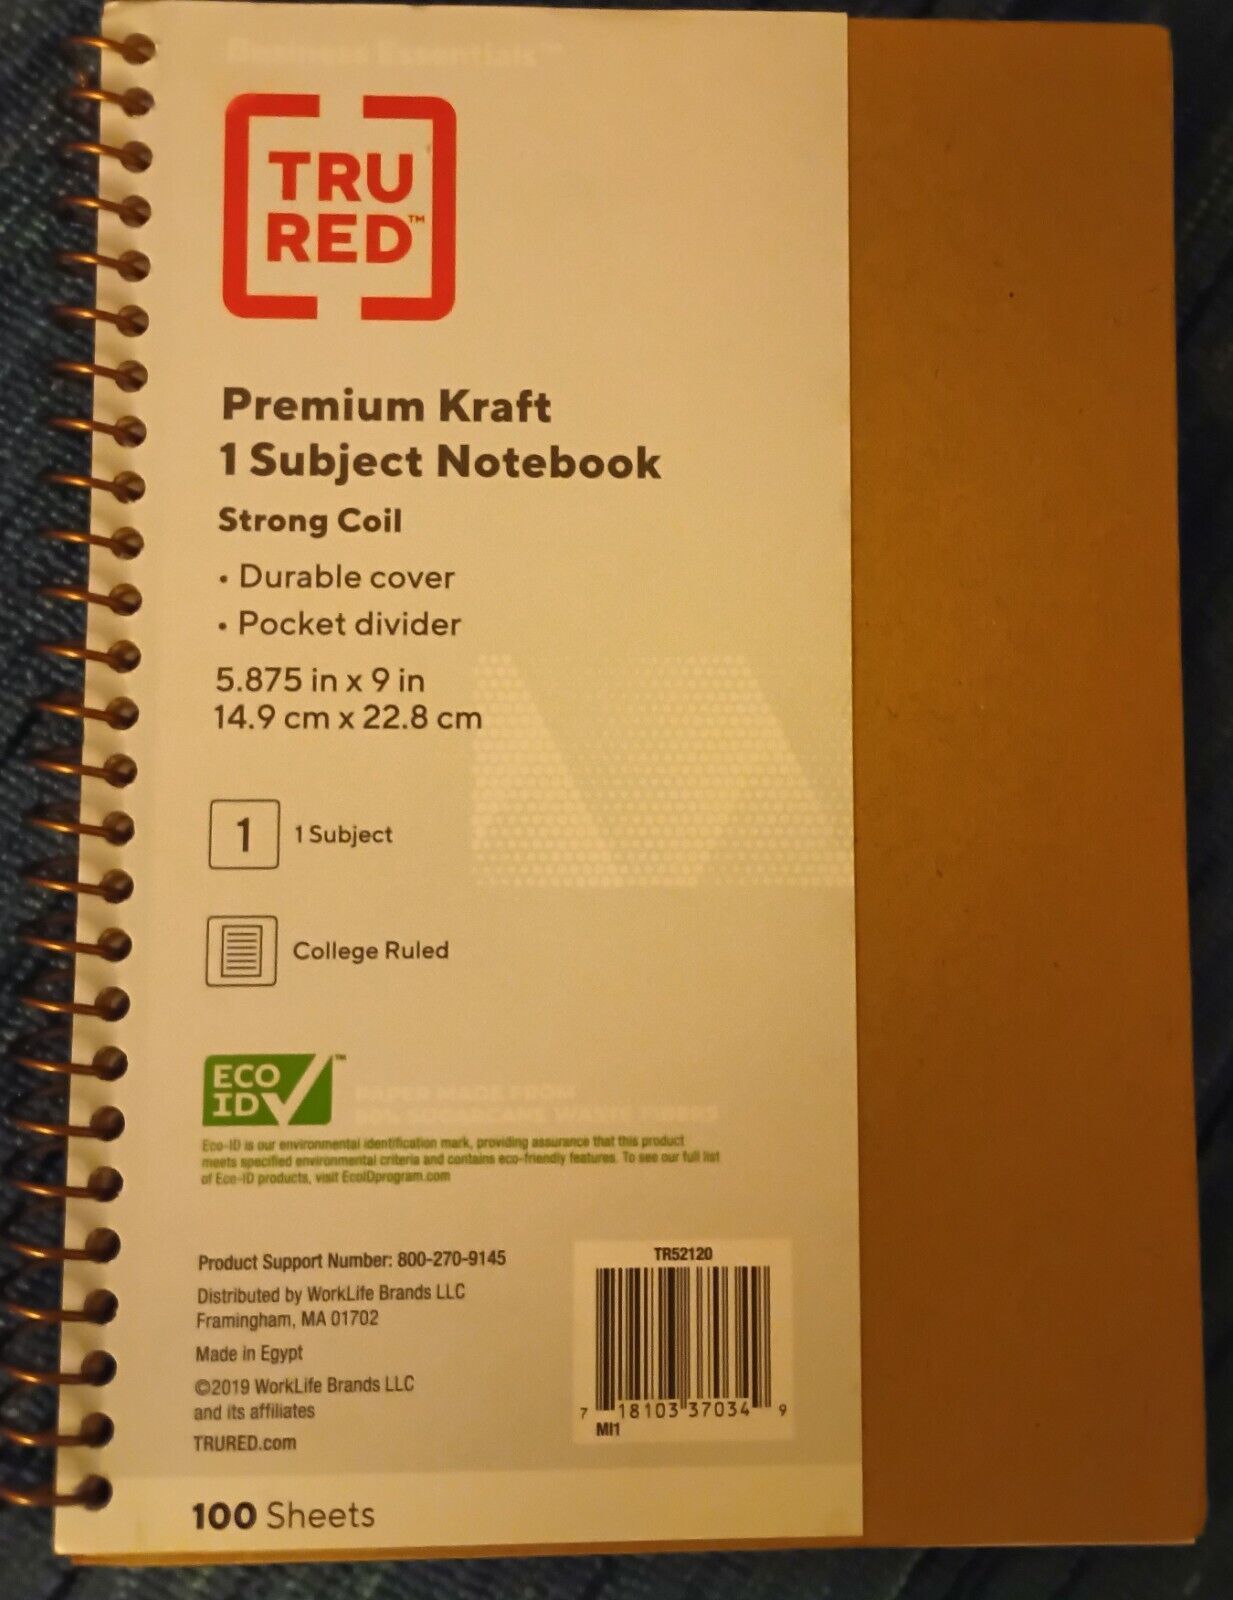 Tru Red Premium Kraft 1 subject notebook, 5.875" by 9" - $11.00